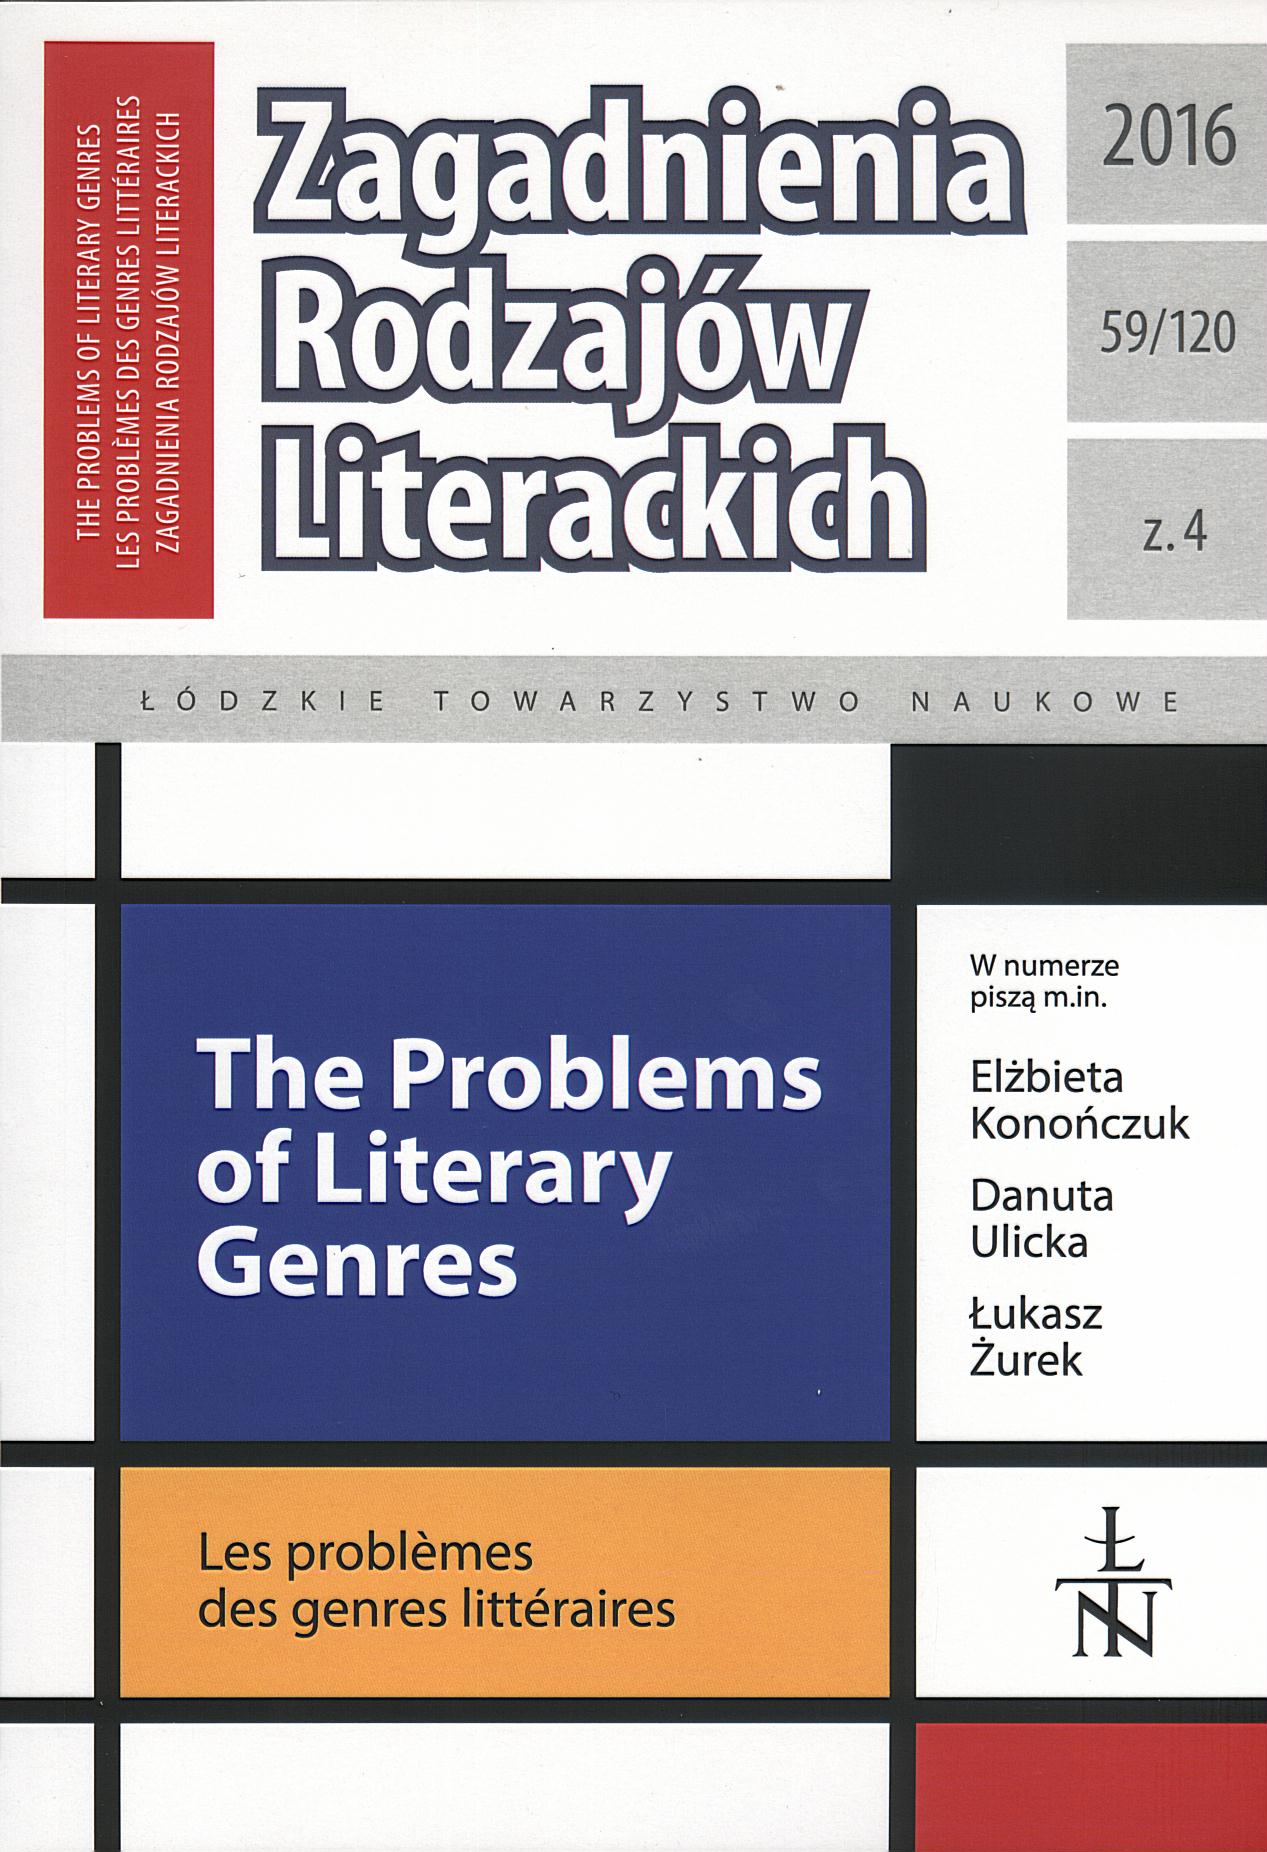 Dictionary materials - bizarro literature Cover Image